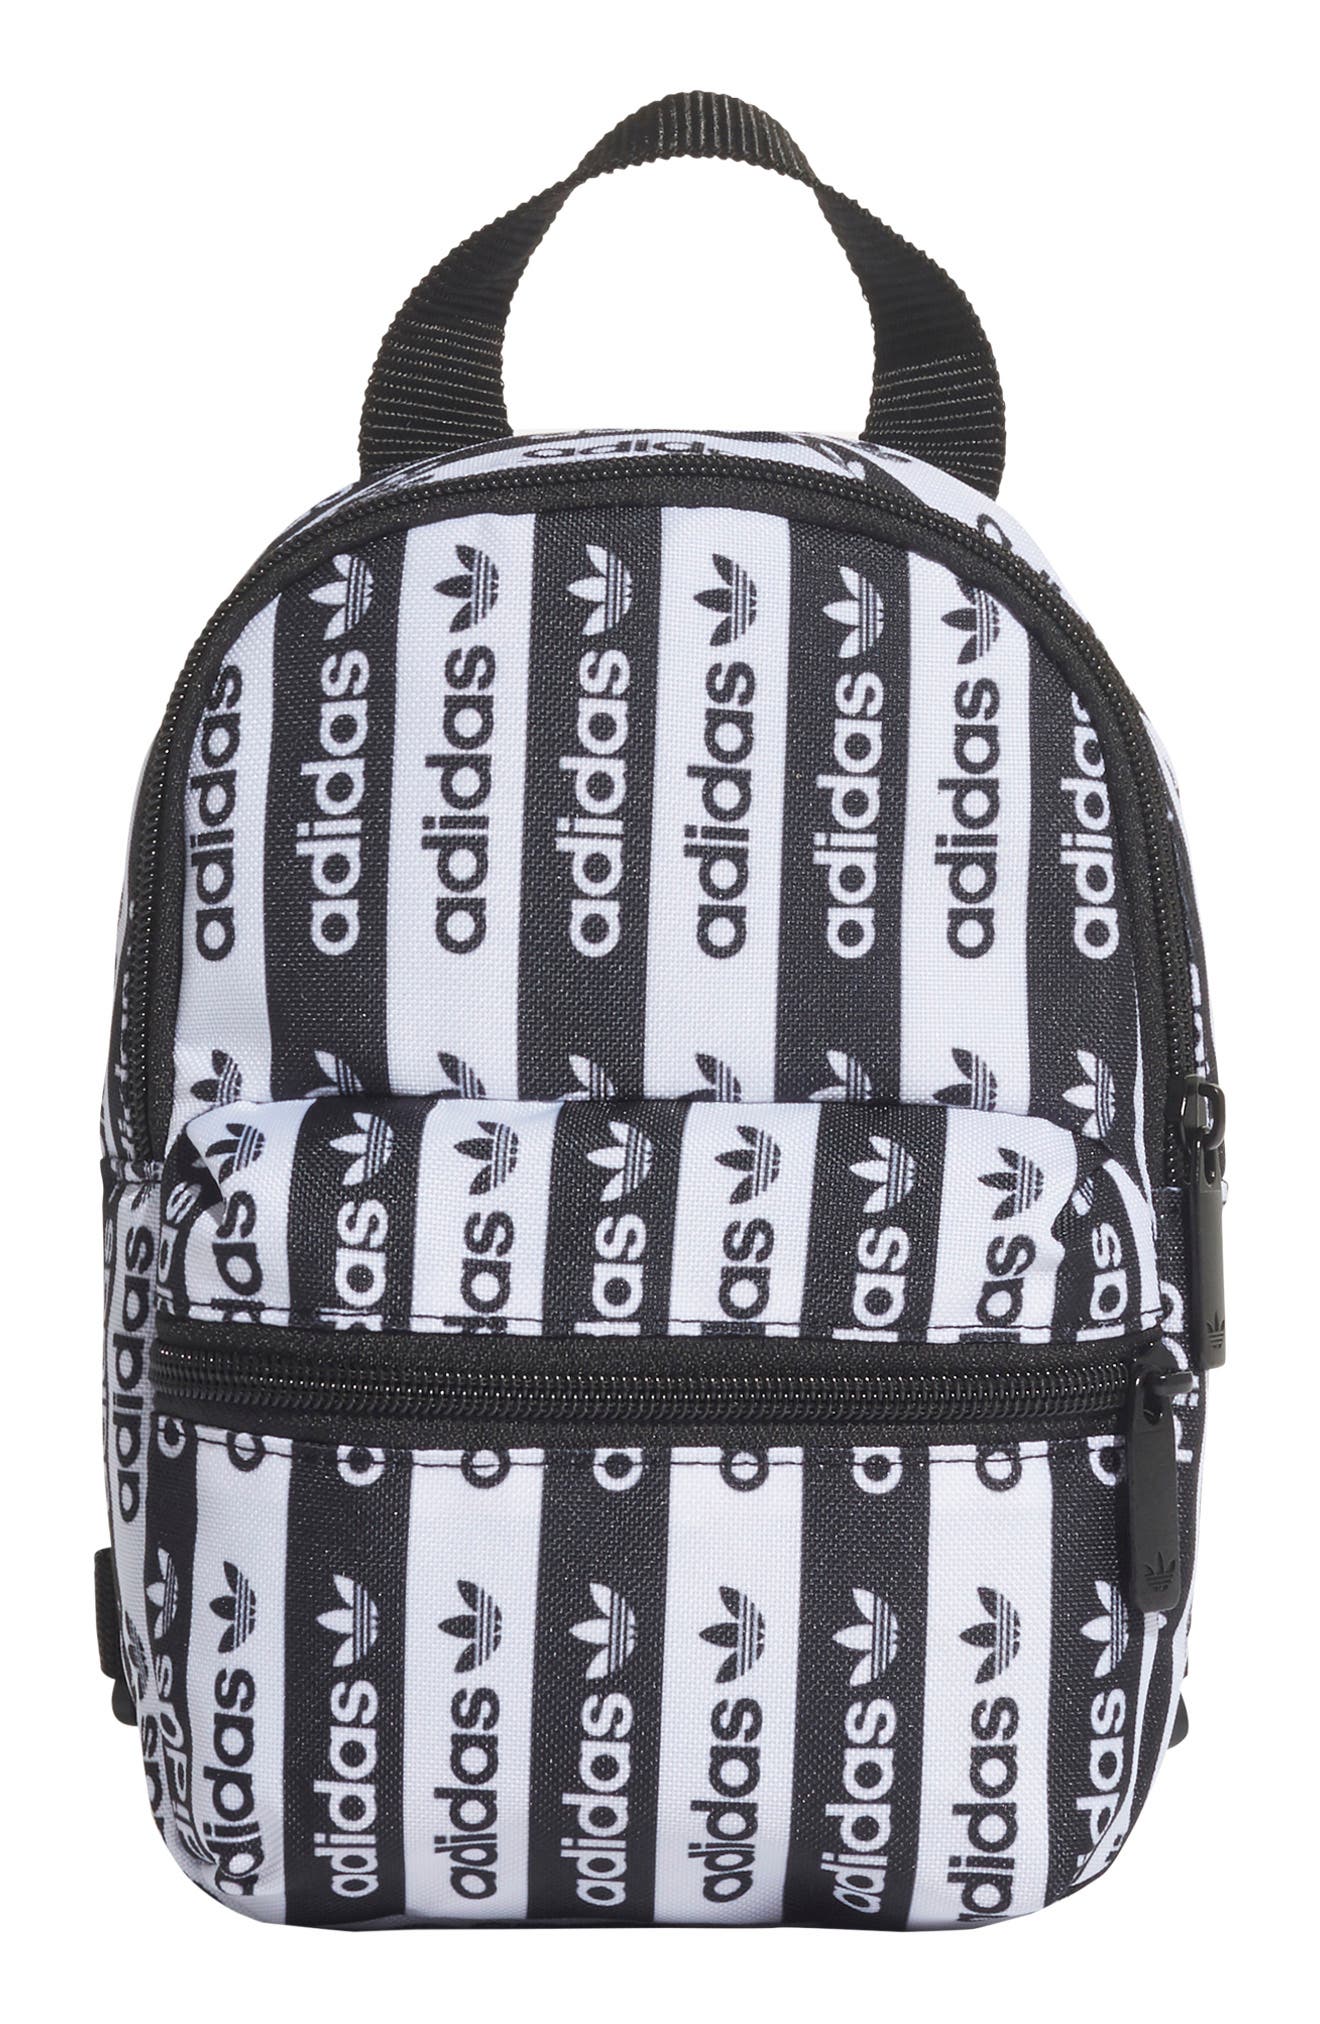 nordstrom adidas backpack